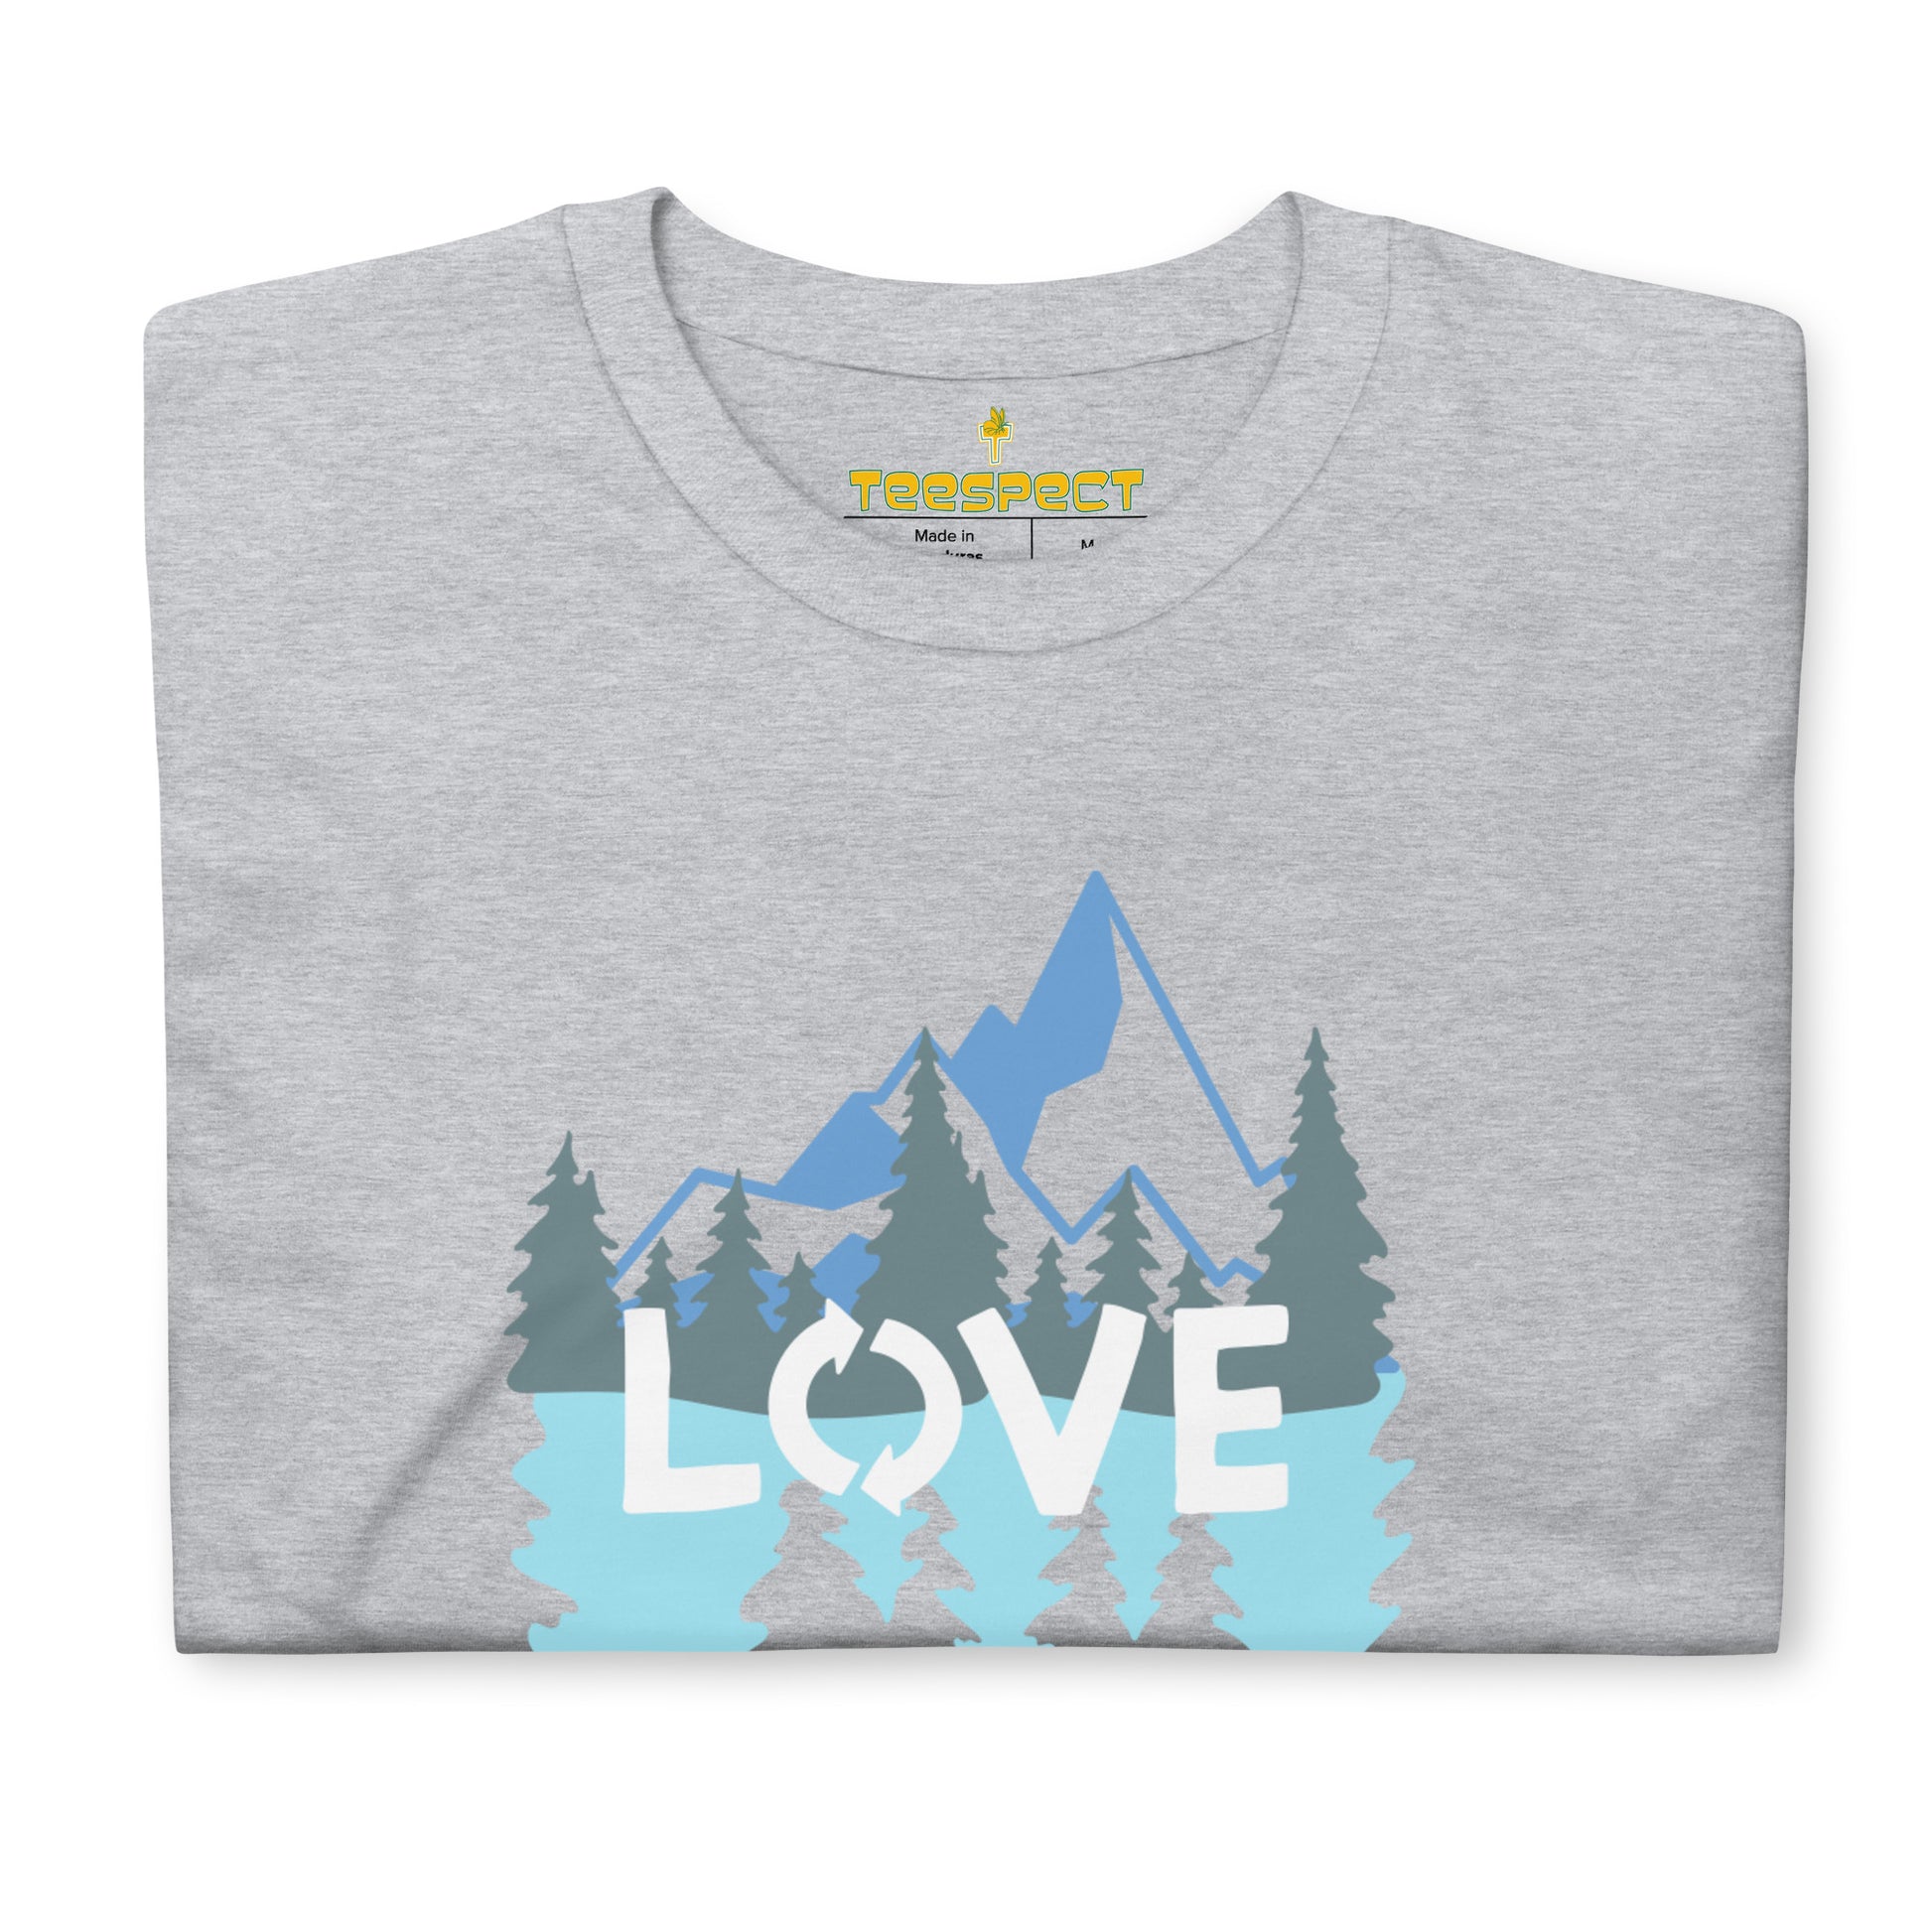 LOVE Nature Mountains Short-Sleeve Unisex T-Shirt TeeSpect